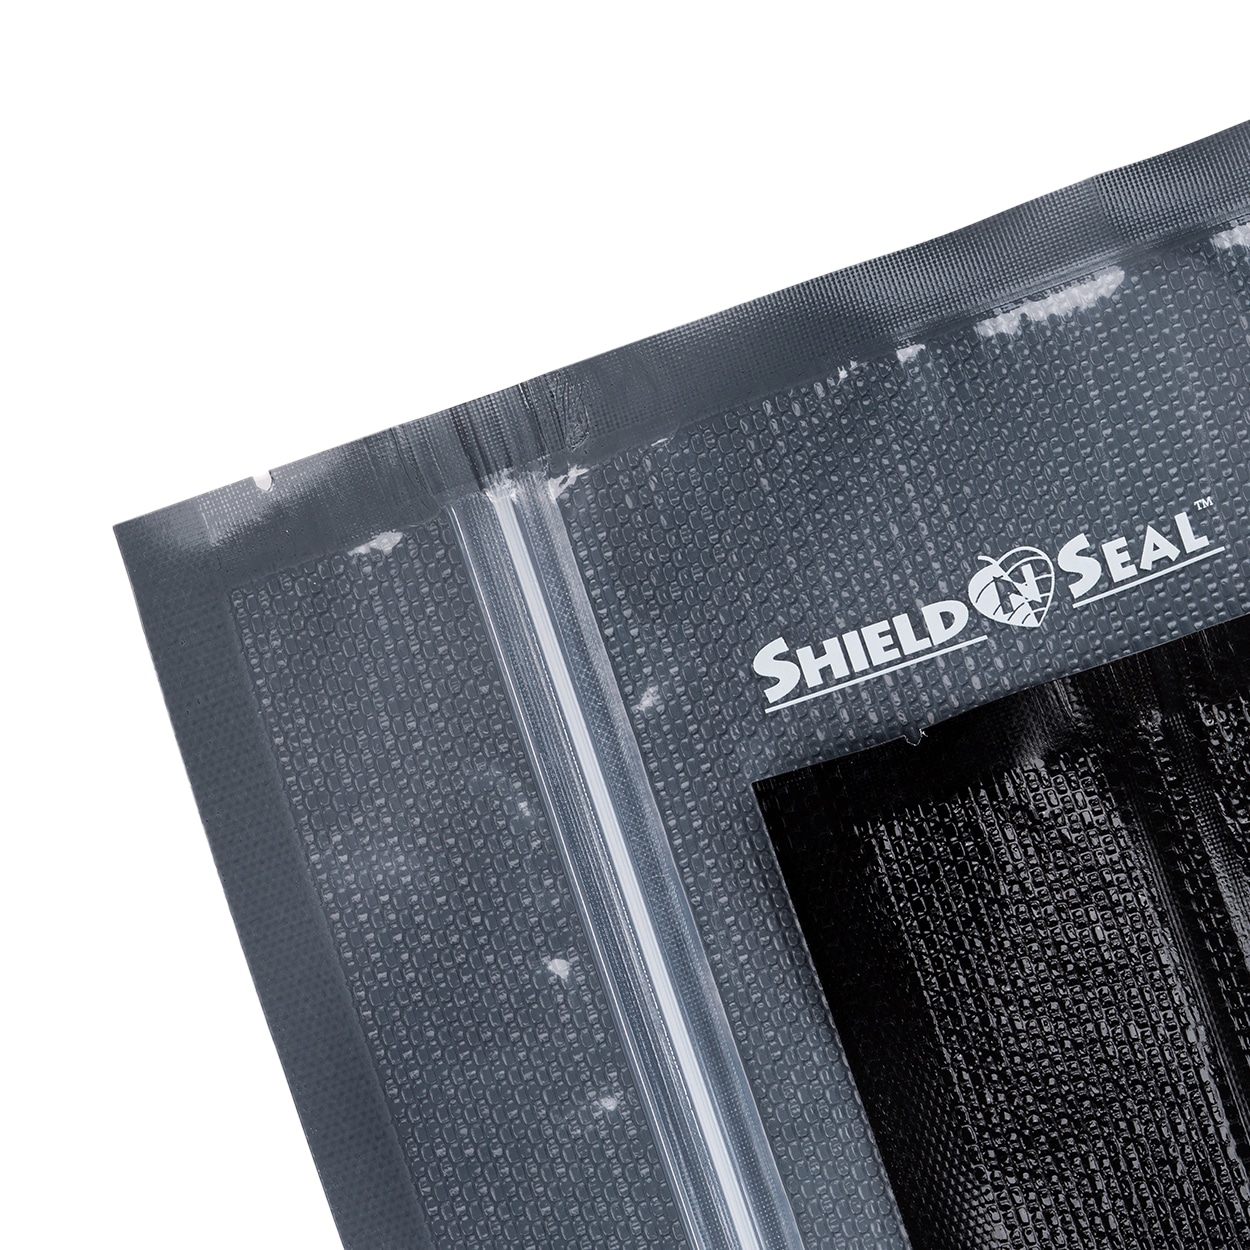 Shield N Seal Precut Bag (11 x 24 / Box of 50) – Bag King